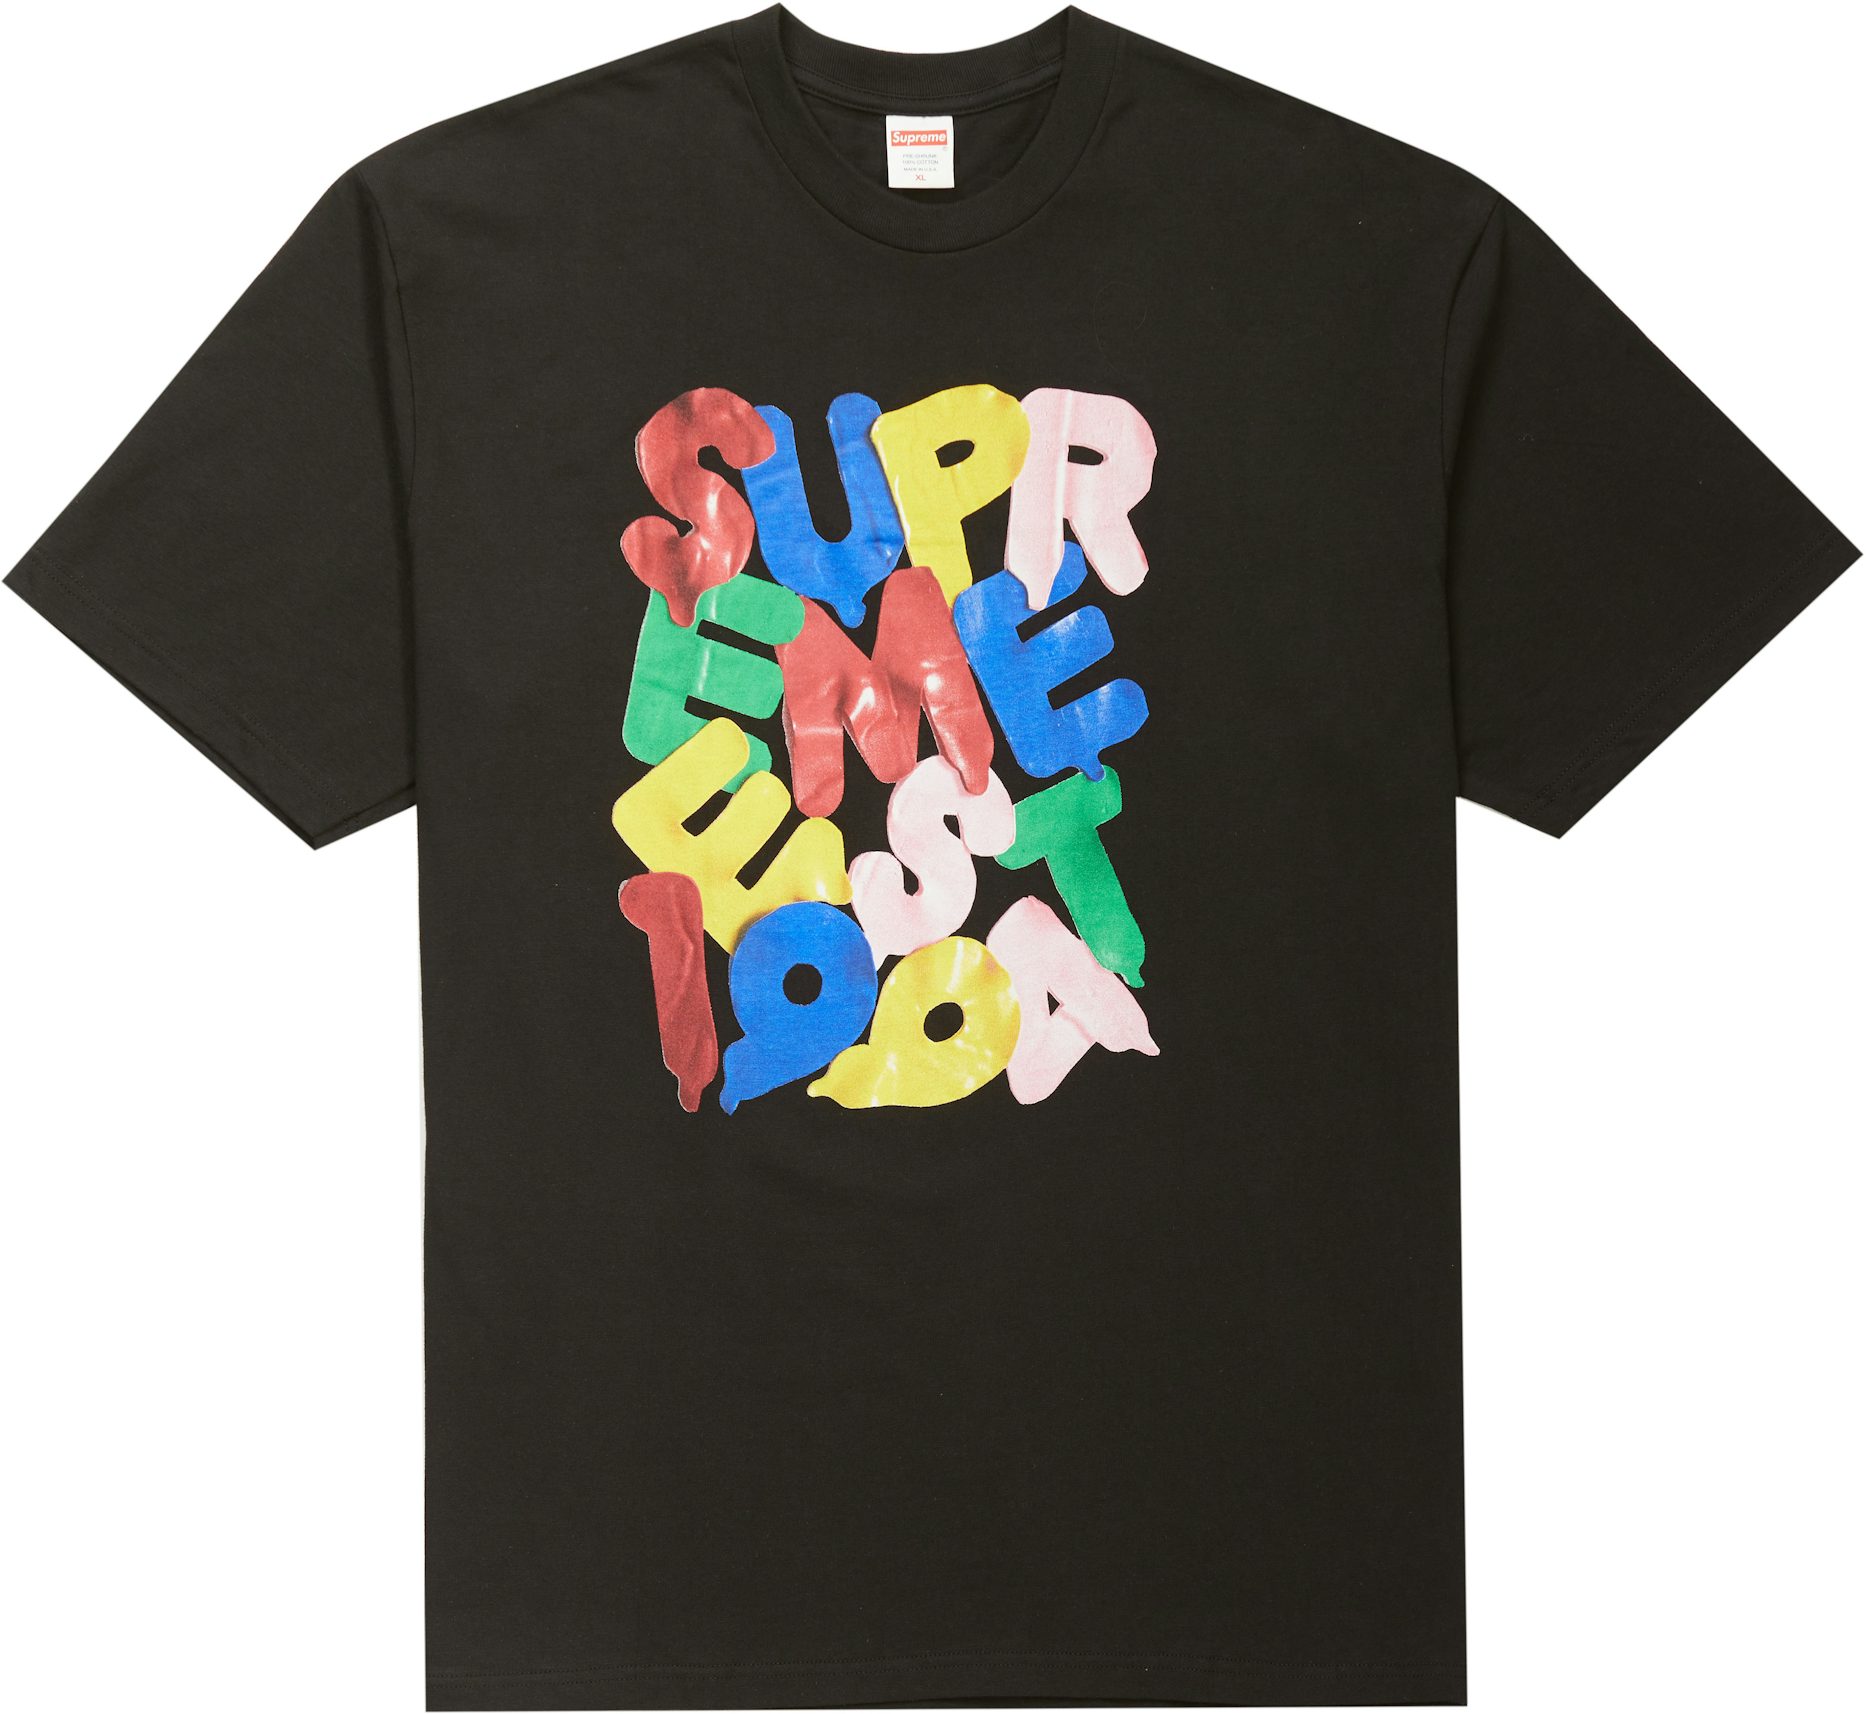 Supreme Ballon T-Shirt, Size Medium - Camo